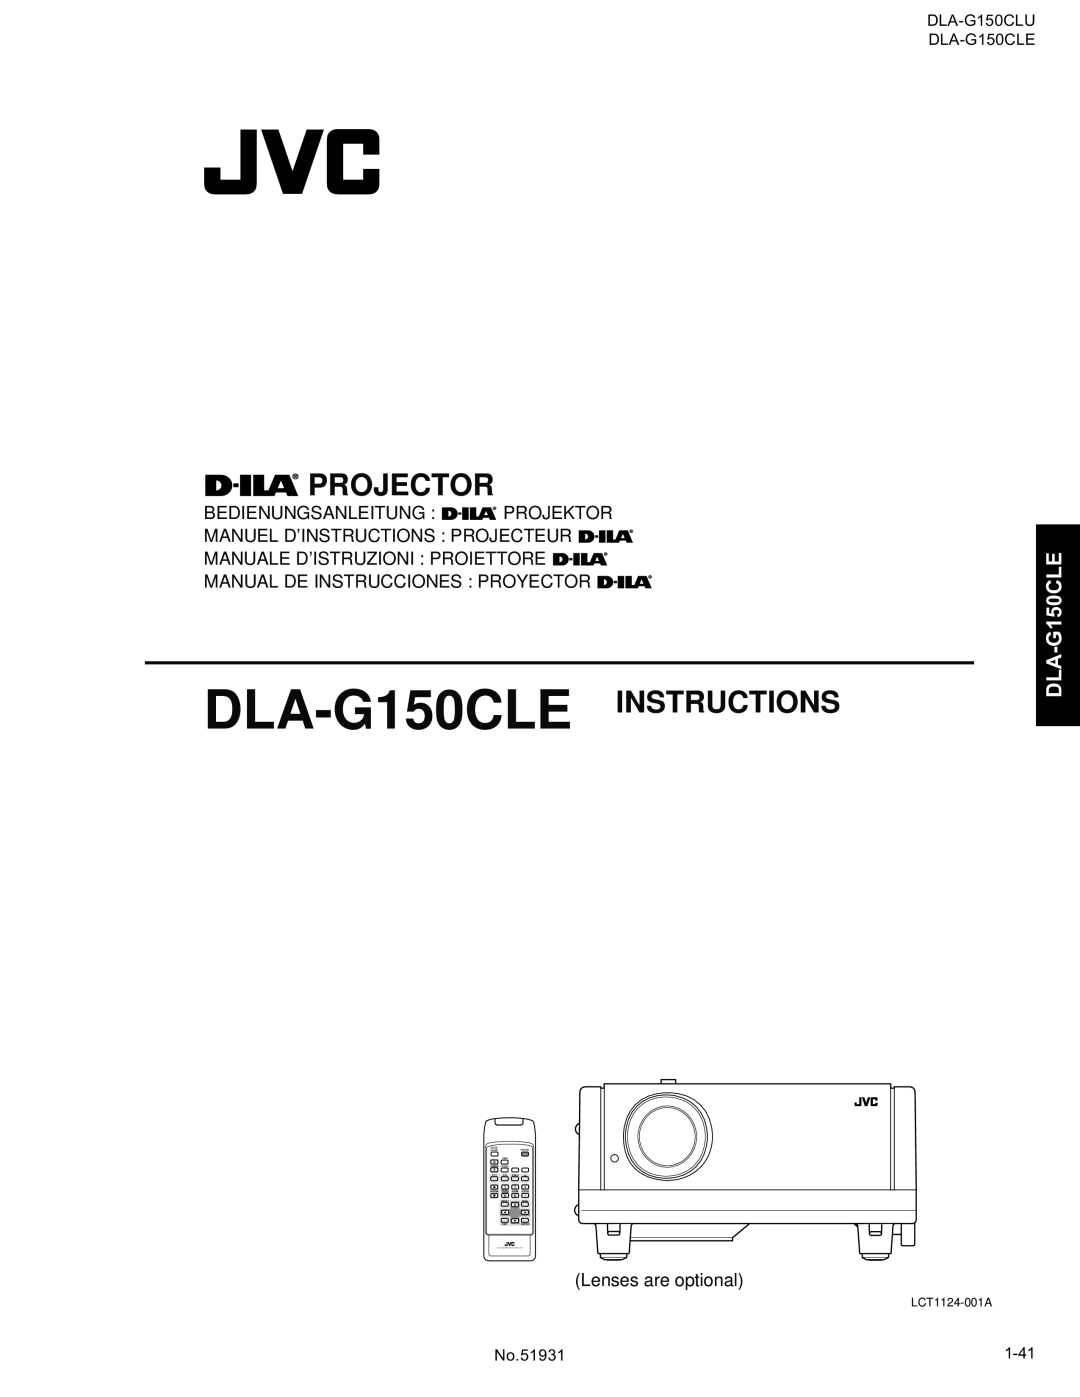 JVC DLA-G150CLU 1-41, DLA-G150CLEINSTRUCTIONS, Projector, Bedienungsanleitung Projektor Manuel D’Instructions Projecteur 